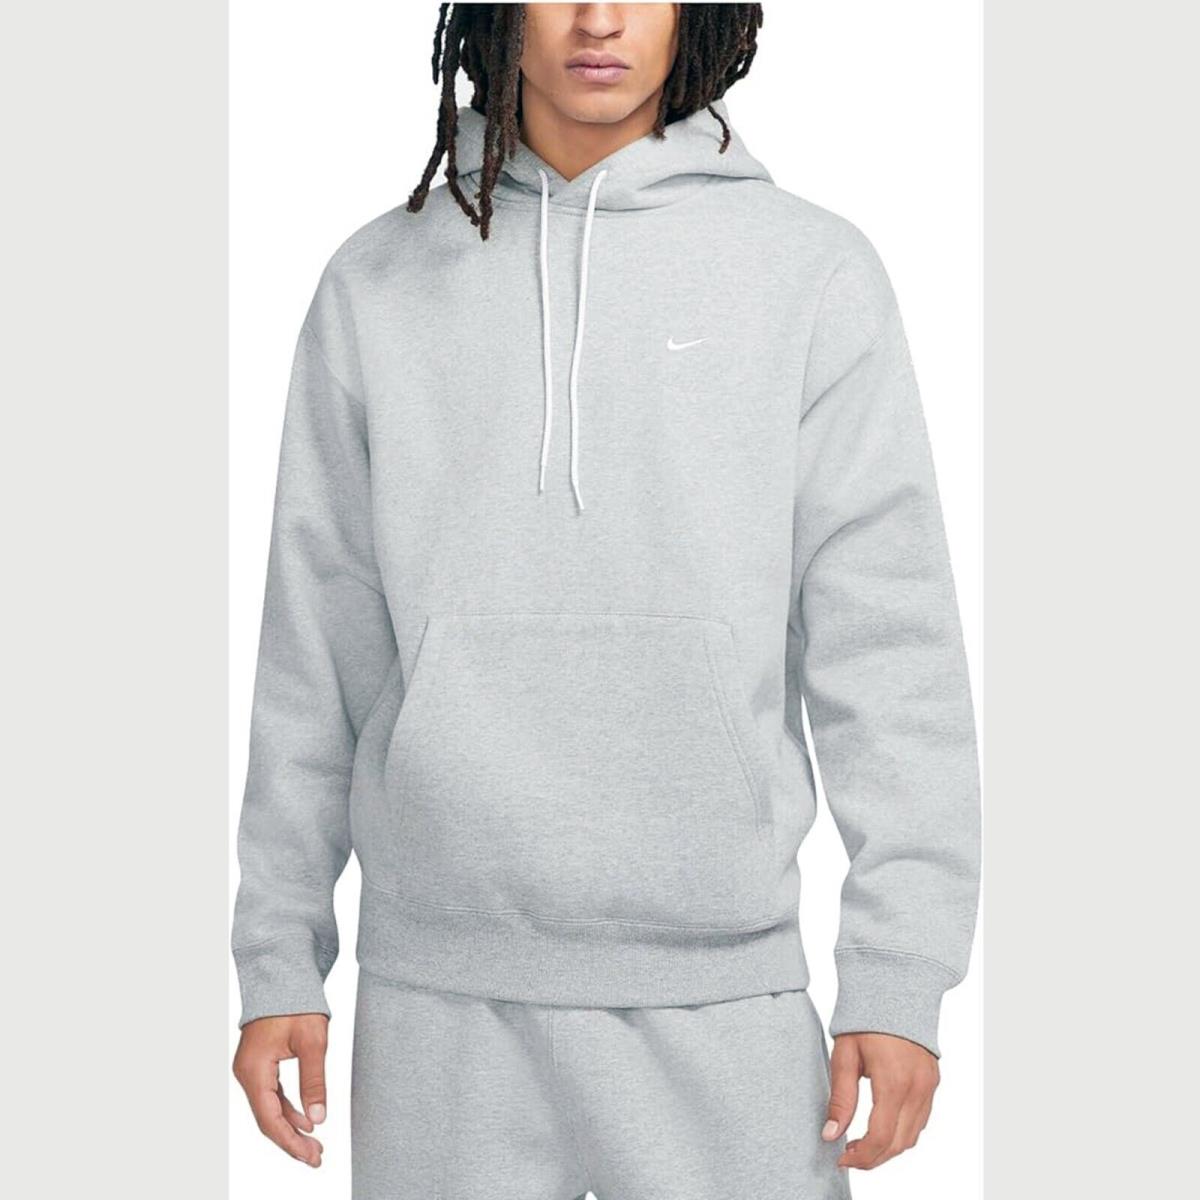 Nike Men`s Fleece Pullover Hoodie Dark Grey Heather DX1355-063 Size MD Reg: